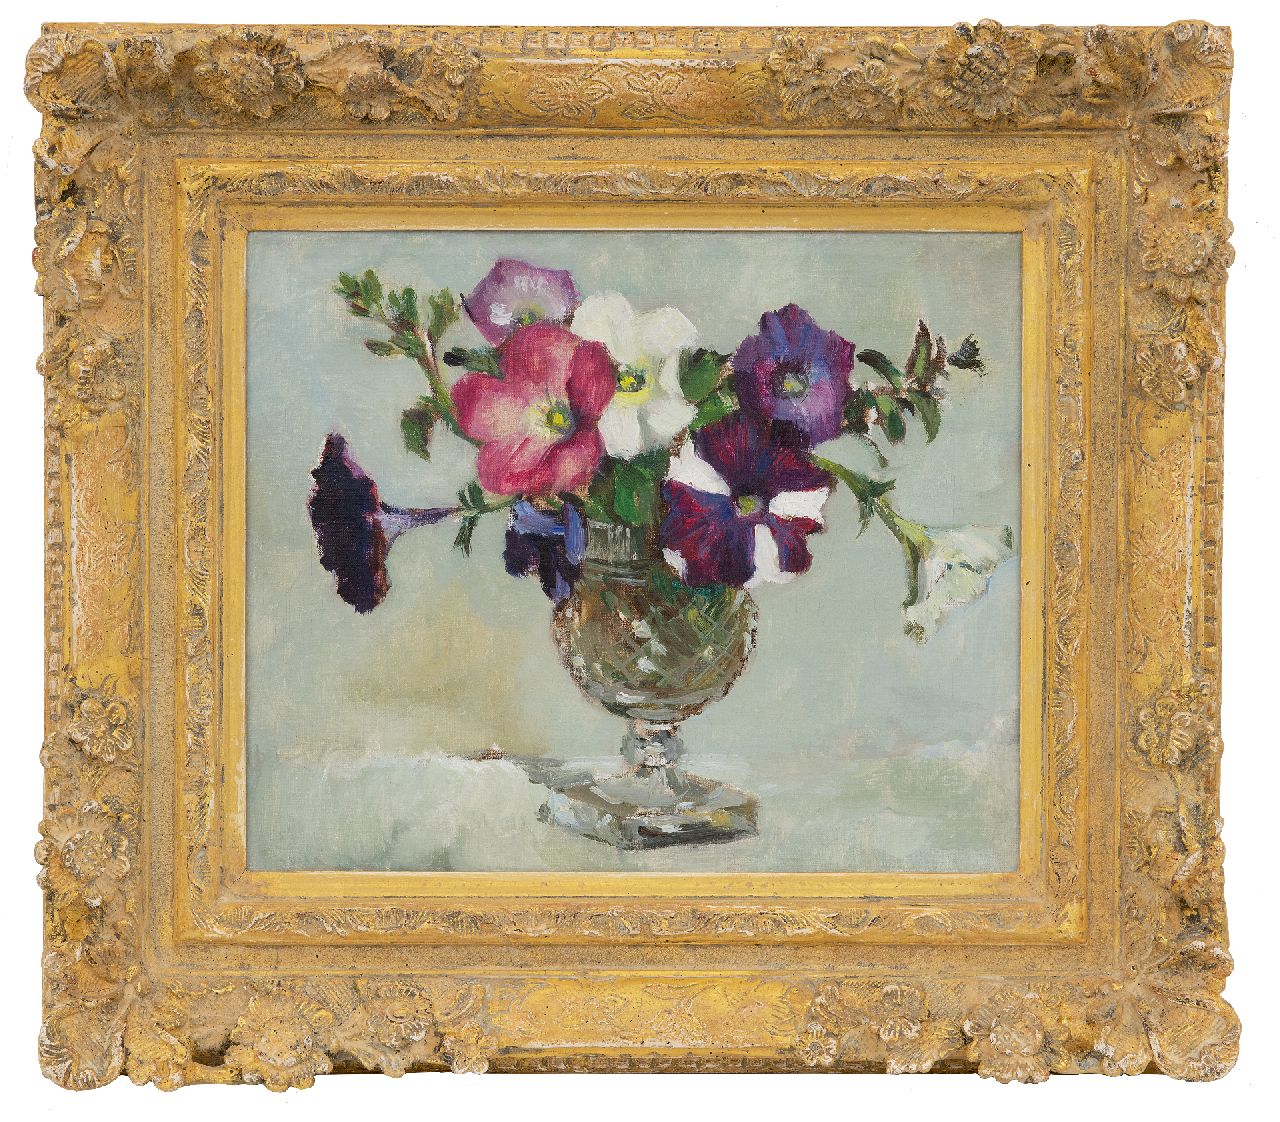 Arntzenius E.C.  | Elise Claudine Arntzenius | Paintings offered for sale | Petunias in a vase, oil on canvas 25.2 x 30.2 cm